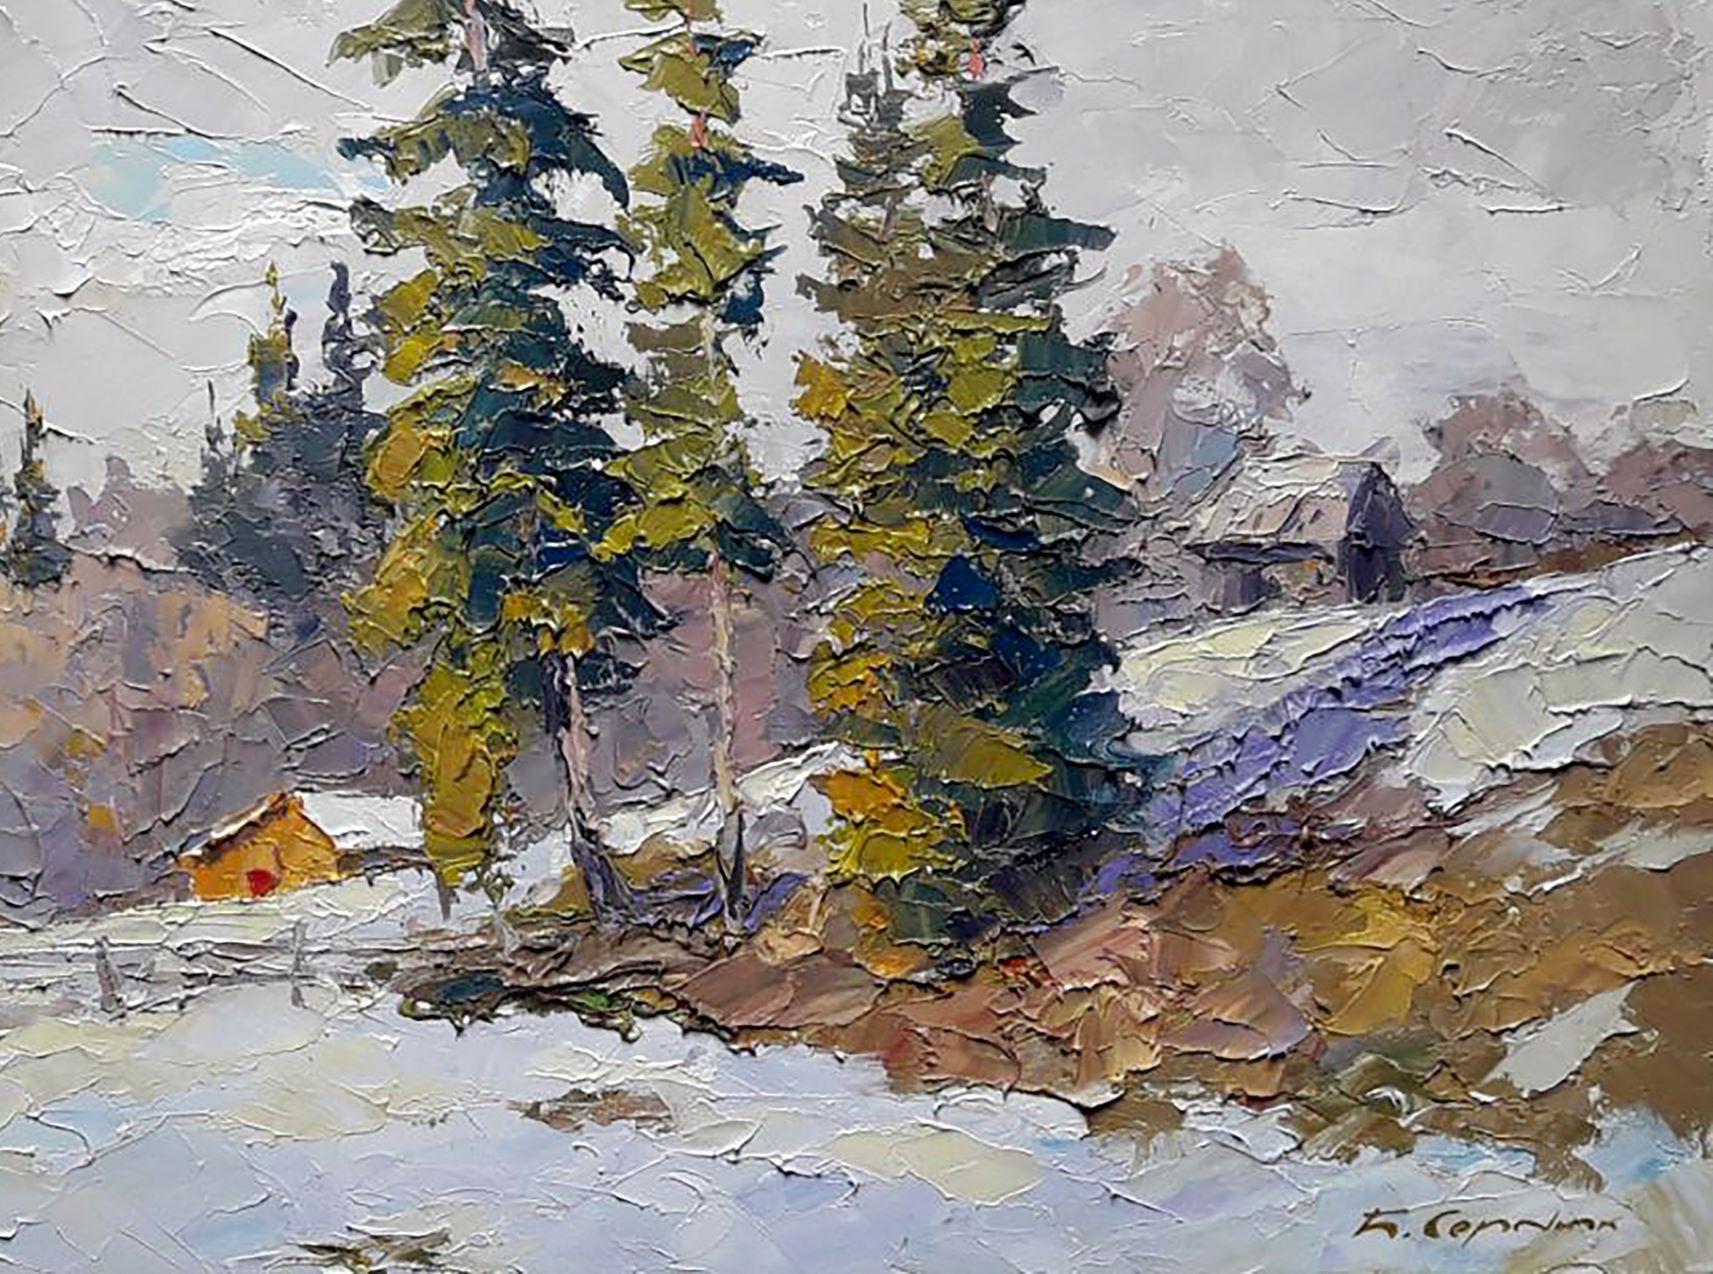 Artist: Boris Serdyuk 
Work: Original oil painting, handmade artwork, one of a kind 
Medium: Oil on Canvas
Style: Impressionism
Year: 2020
Title: Winter spruces
Size: 19.5